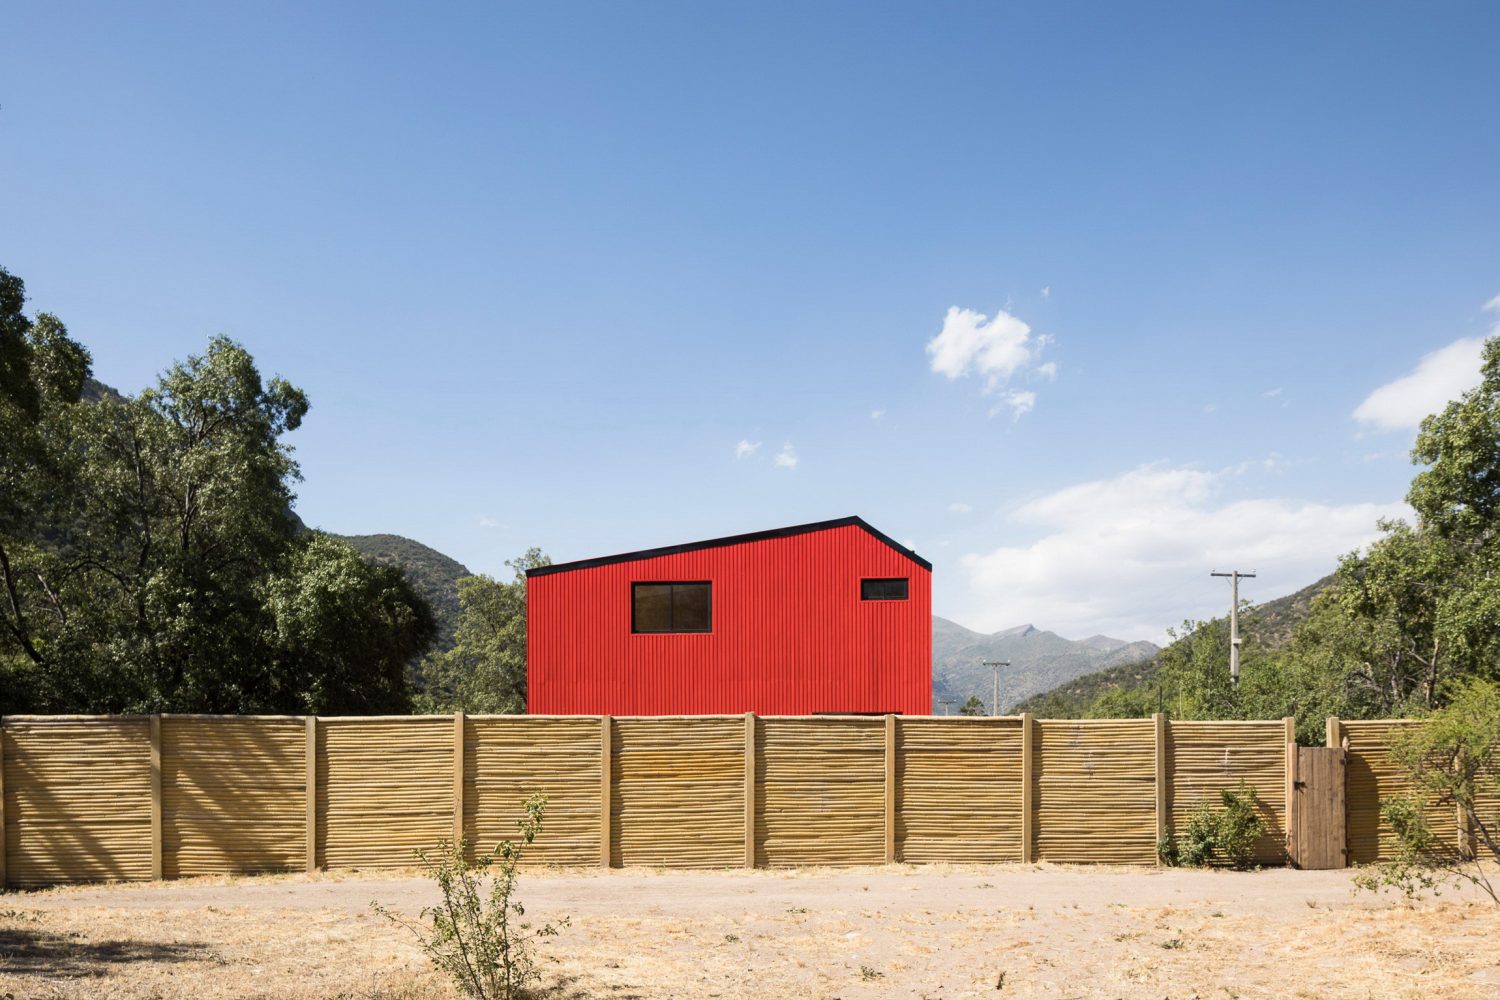 Casa La Roja – The Red House by Felipe Assadi Arquitectos